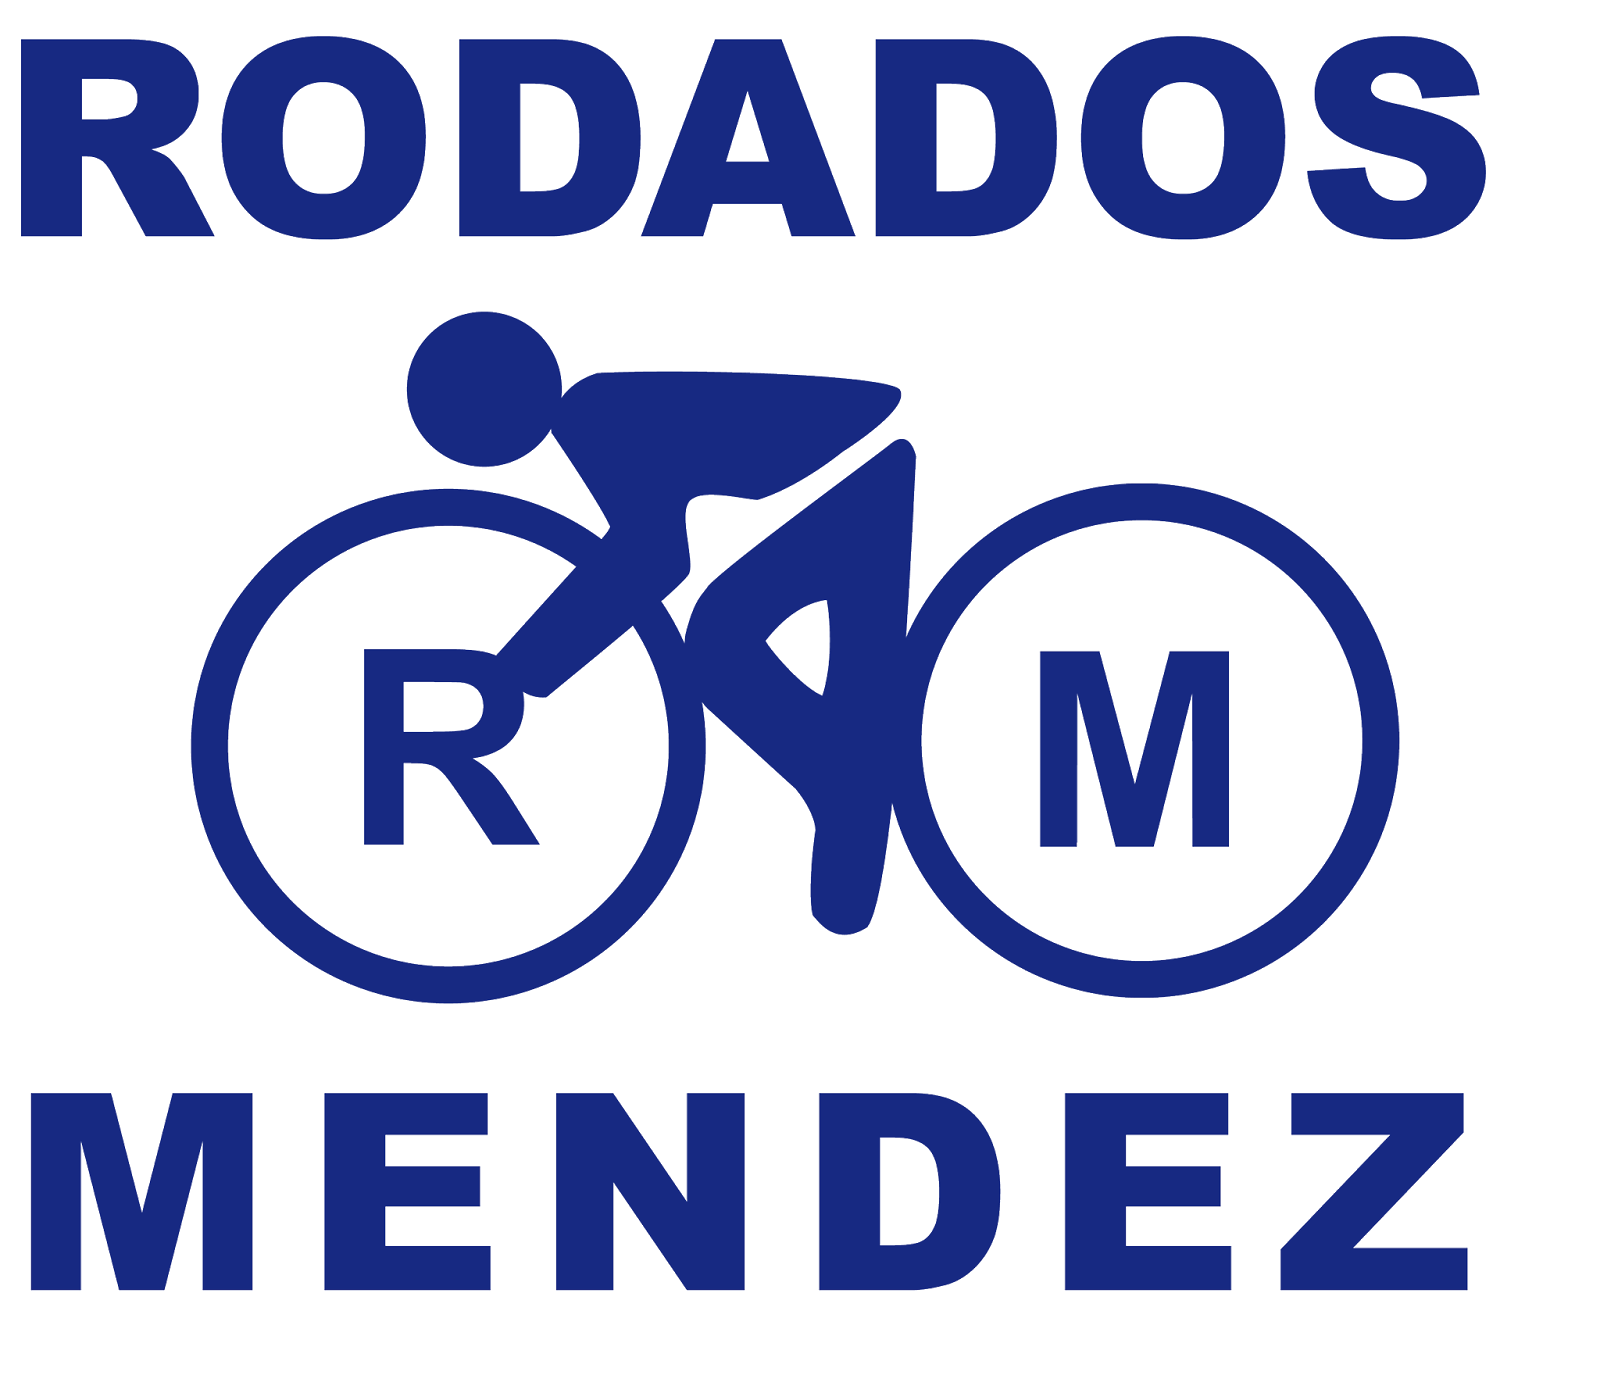 Rodados Mendez se sube a la bici!